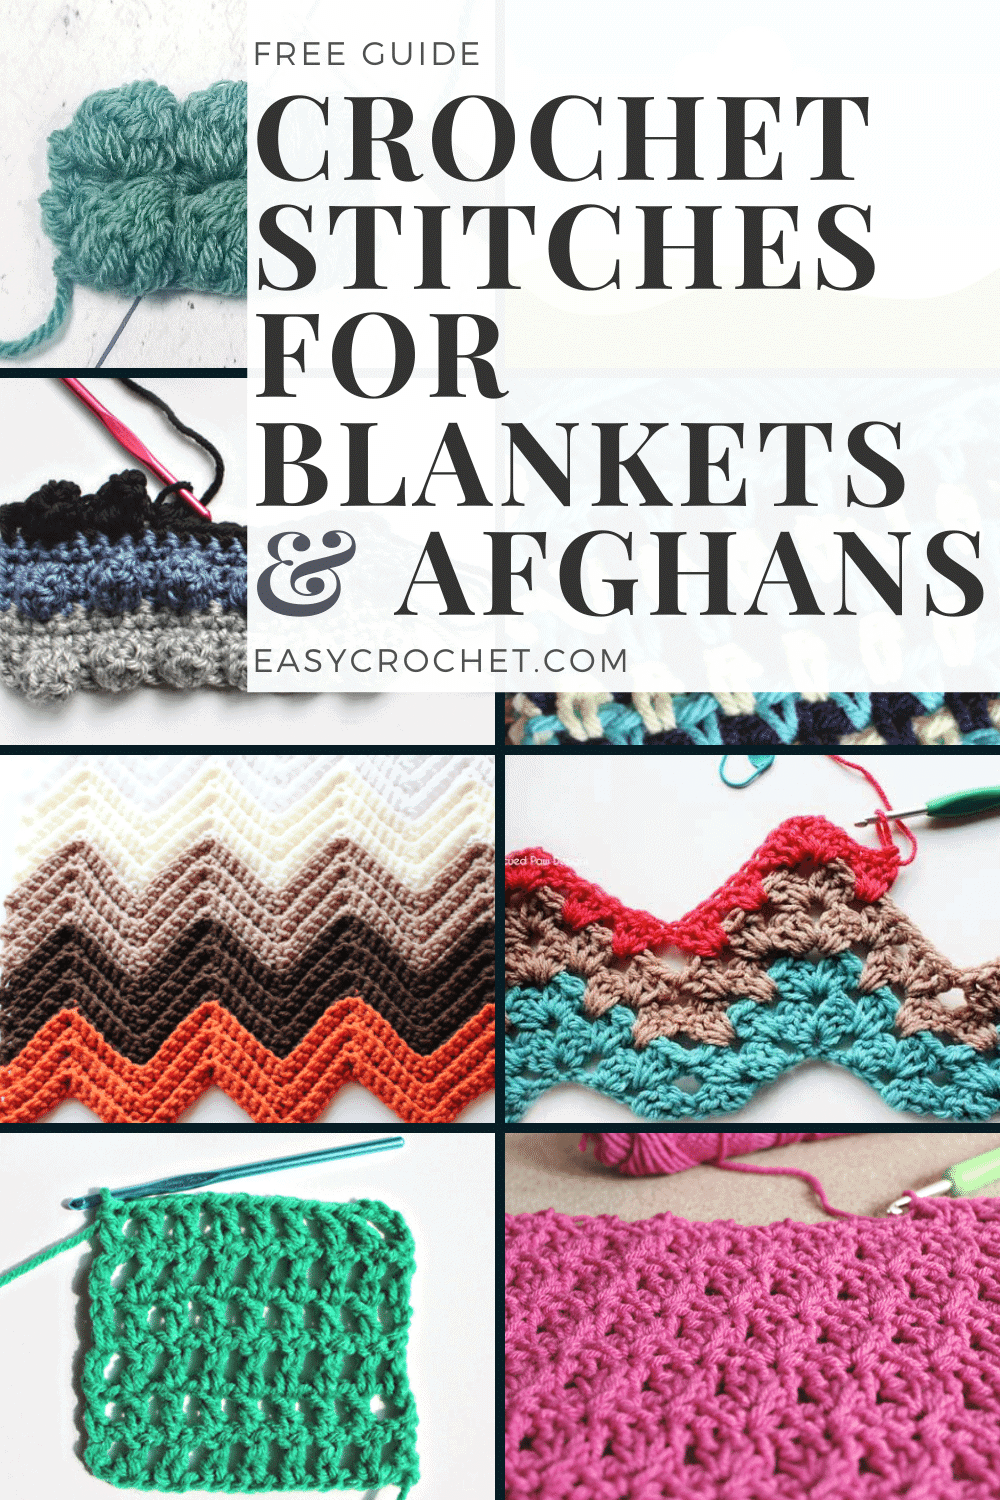  crochet stitches for blankets